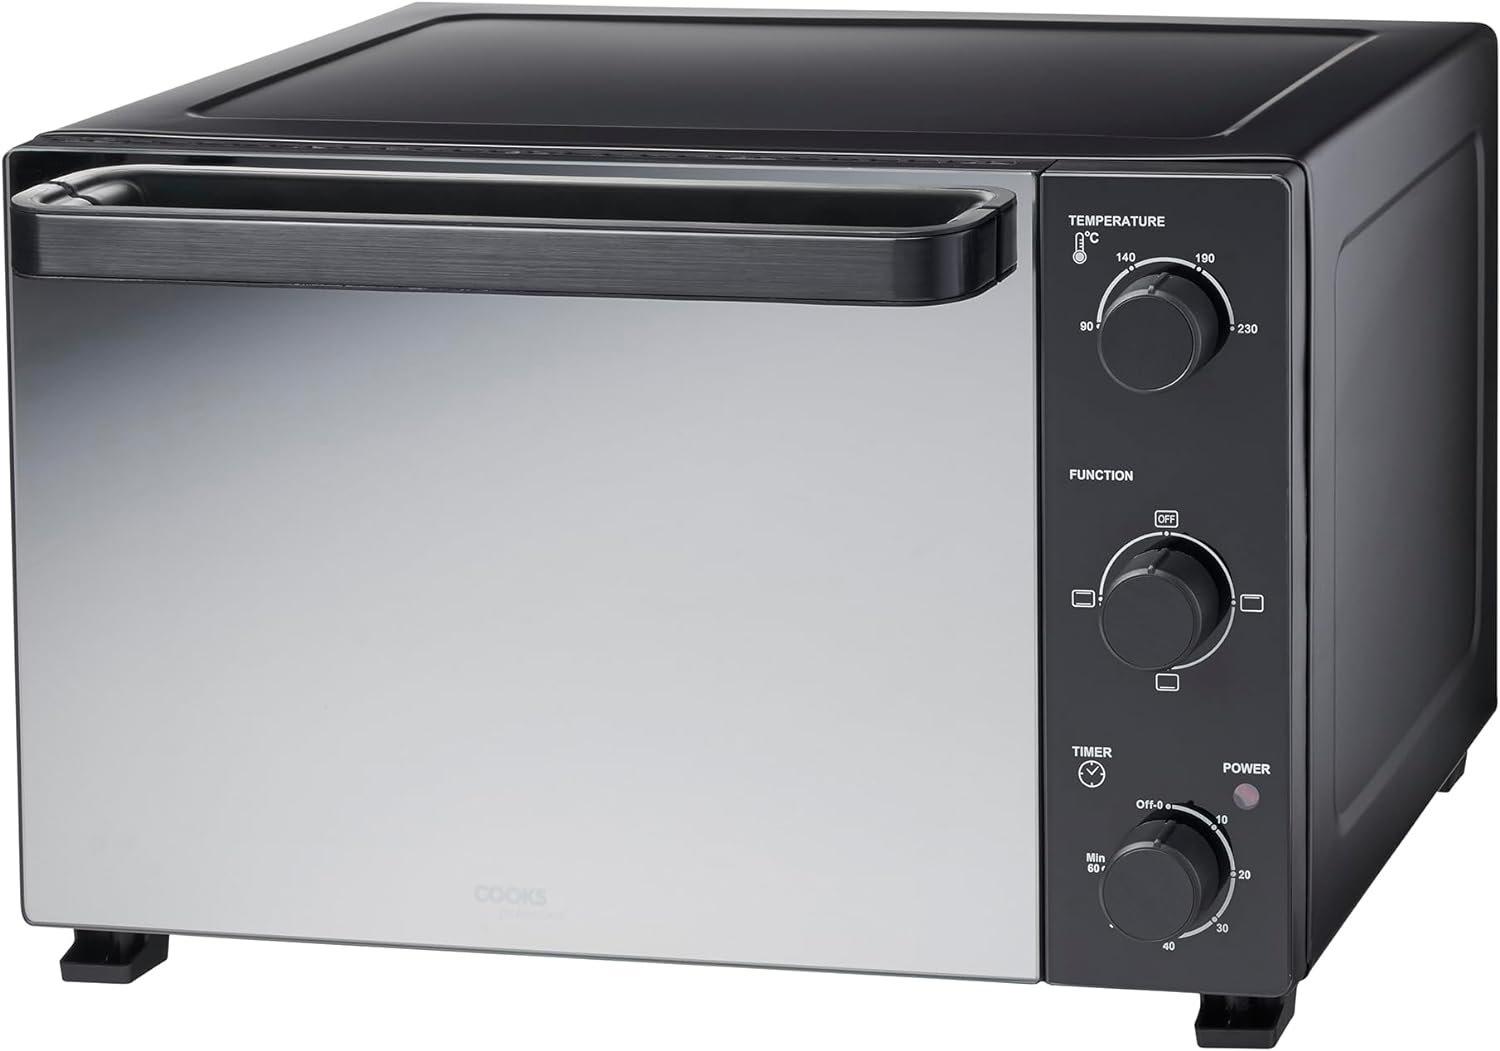 Mini Oven Electric Multi Function Countertop Cooker 34L Capacity Adjustable Temperature Control & Ti